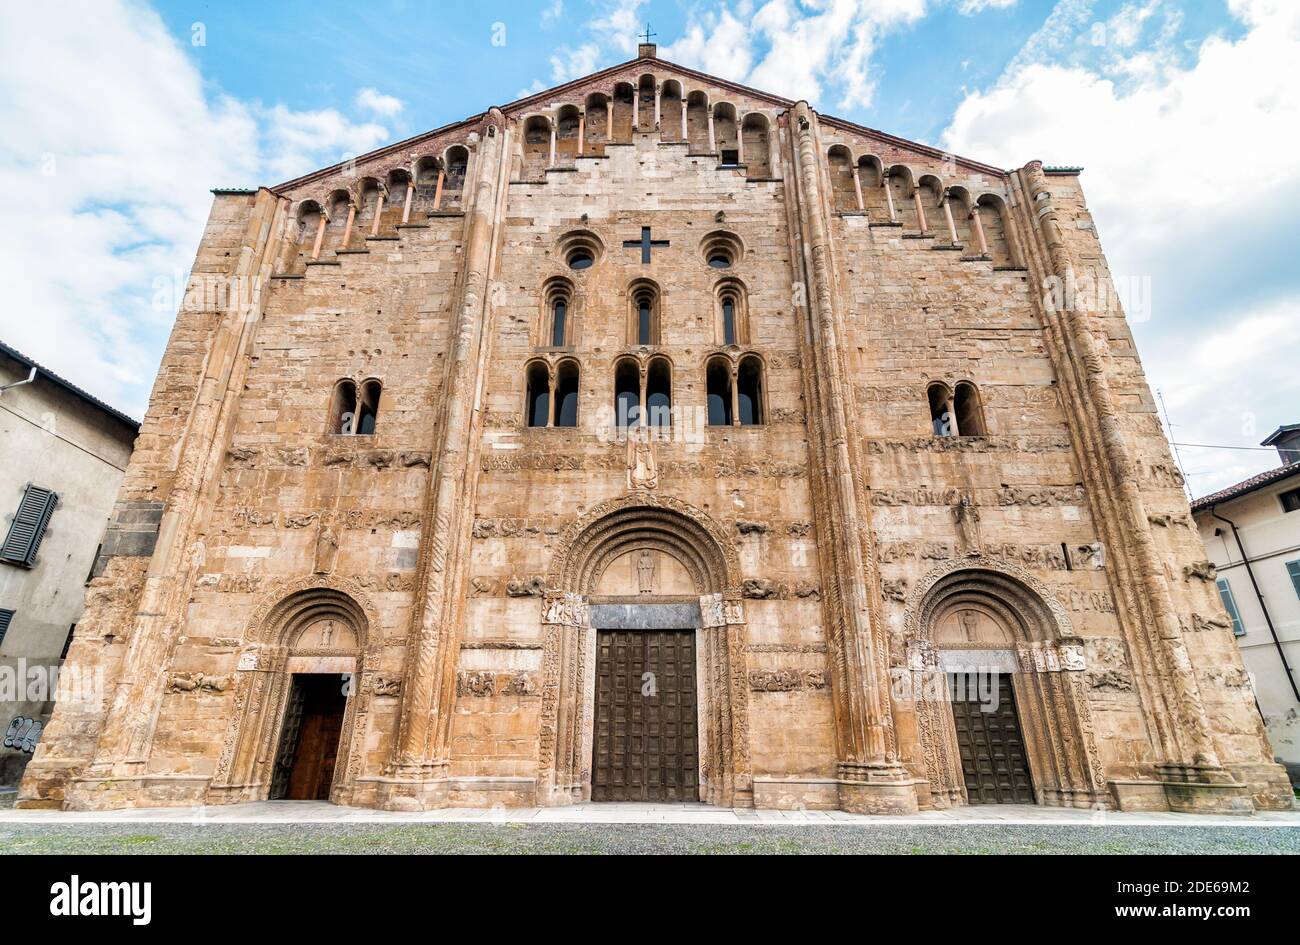 Facade of The Basilica of San Michele Maggiore in Pavia, Lombardy, Italy  Stock Photo - Alamy